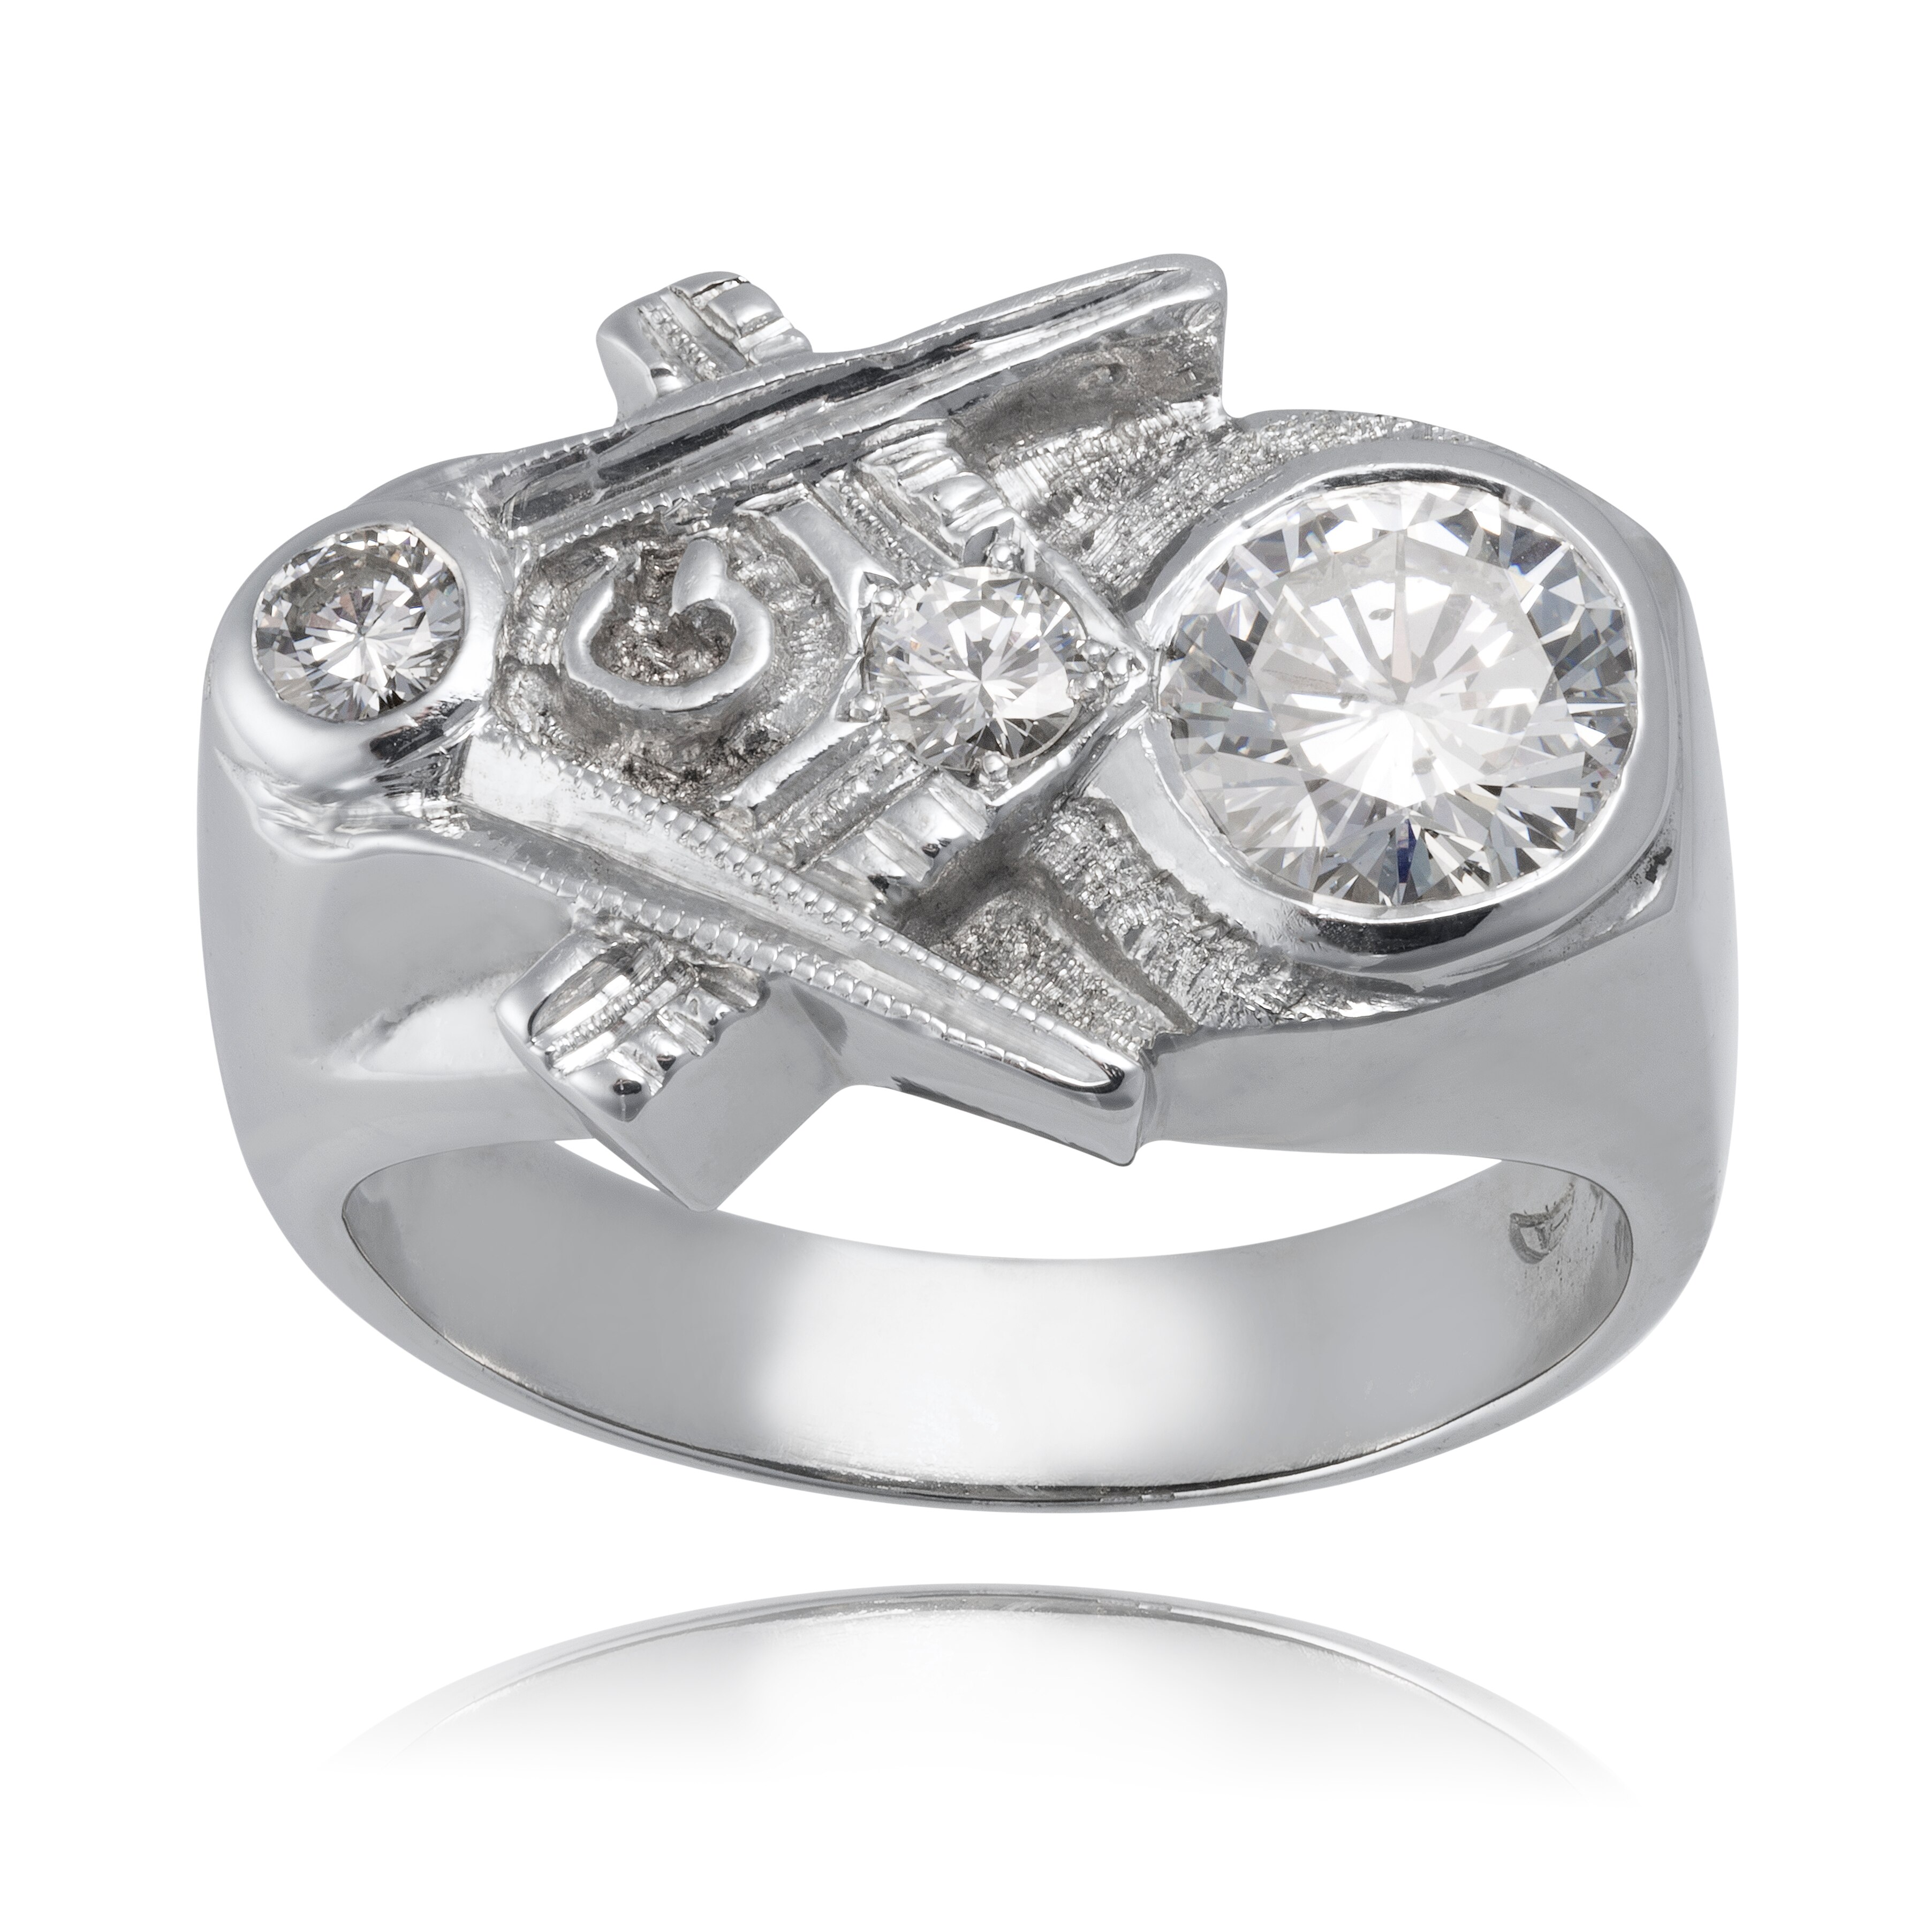 Mercedes Ring Special design ring-925 silver-White Swarovski-Custom Initials